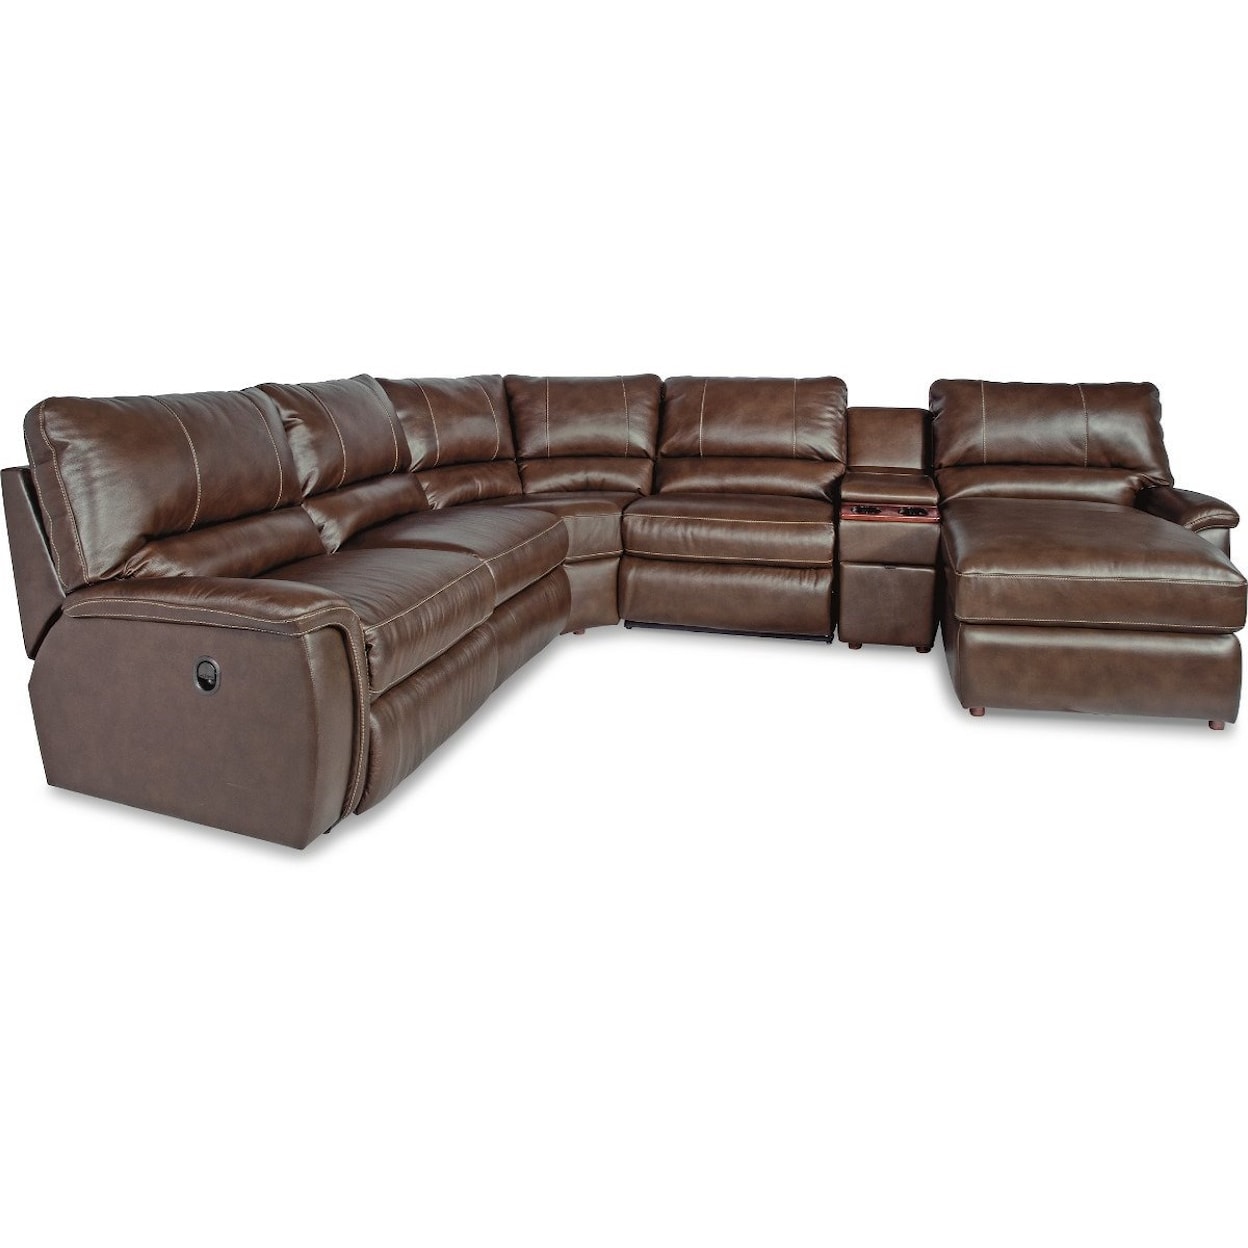 La-Z-Boy ASPEN 6 Pc Reclining Sectional Sofa